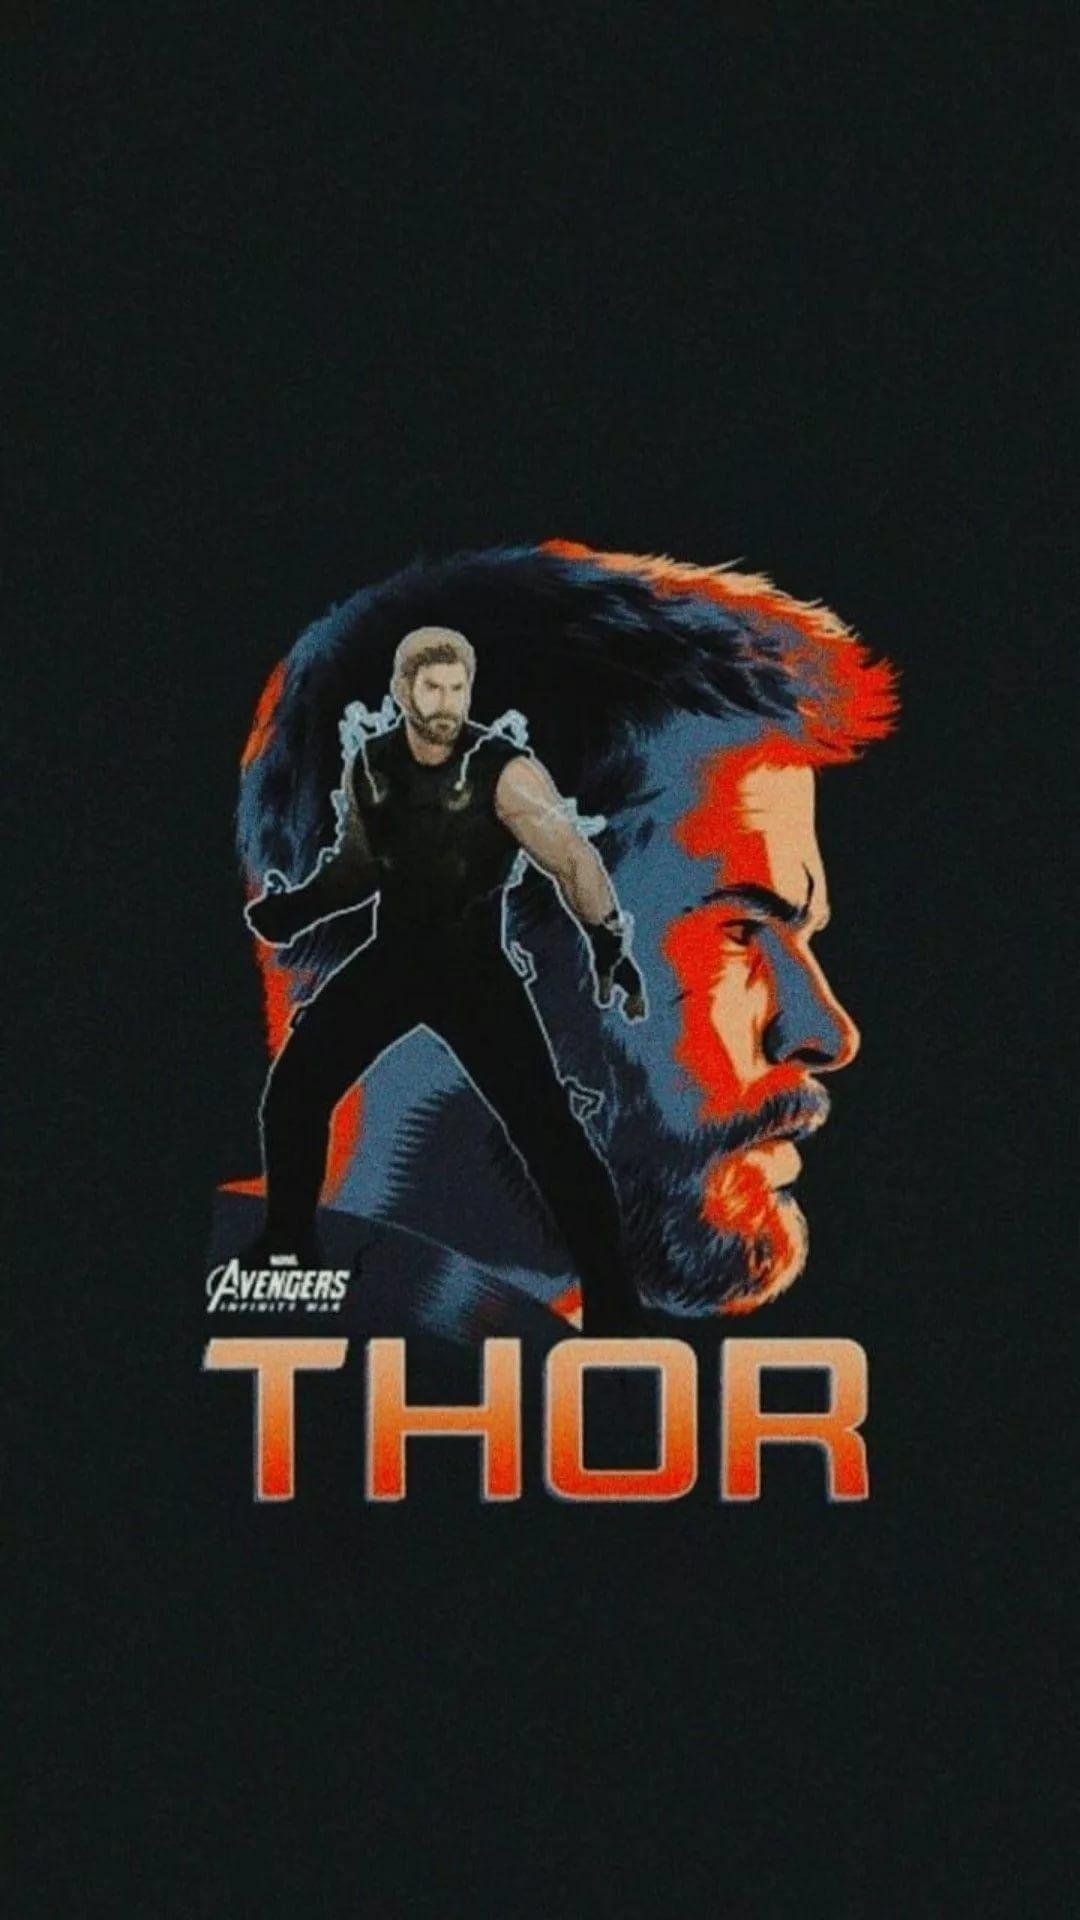 Thor illustration art Wallpaper Download